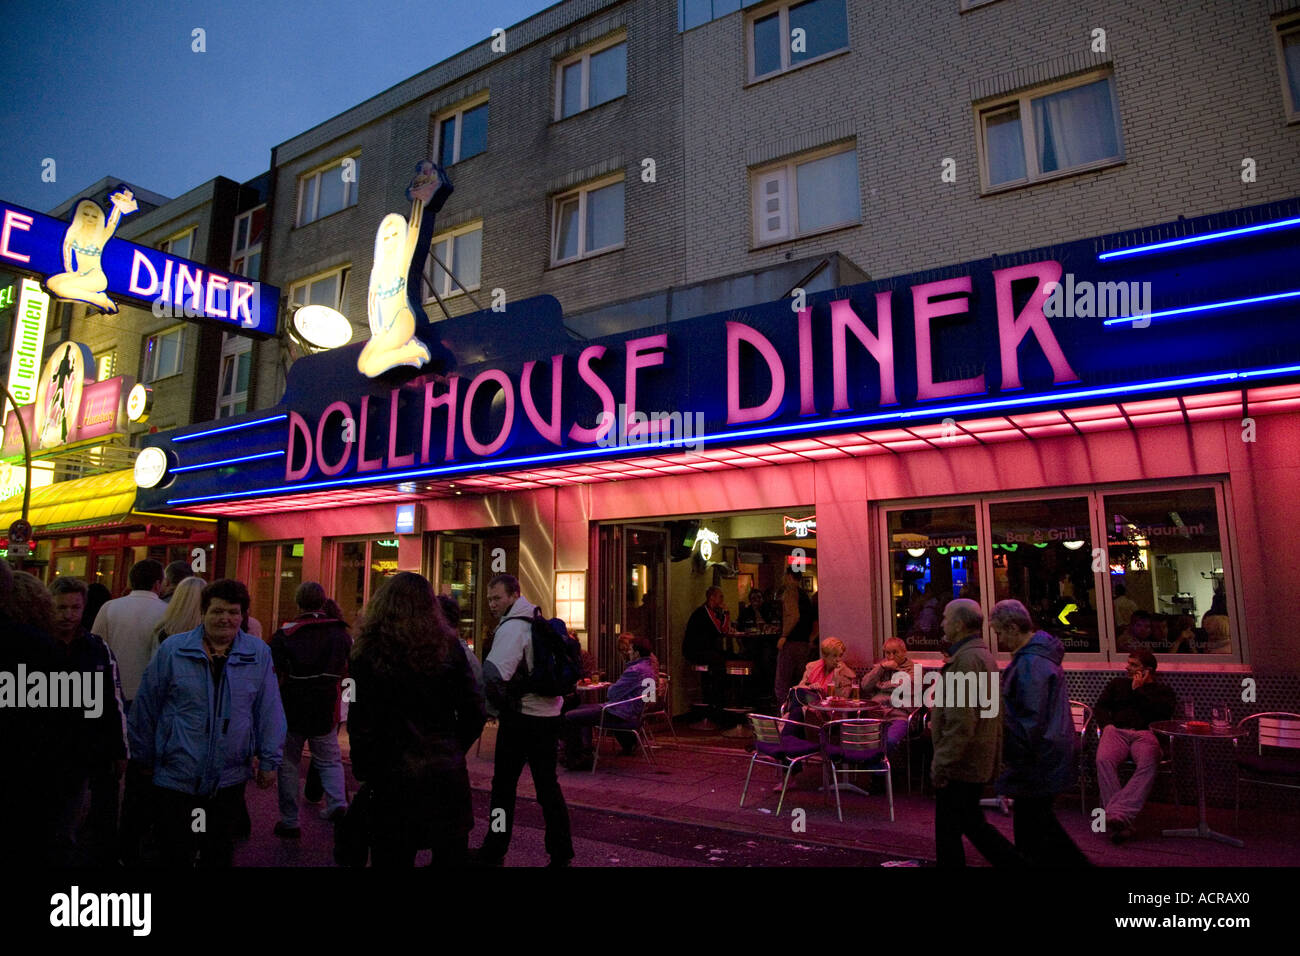 Diner de dollhouse, Grosse Freiheit, St Pauli, Reeperbahn, Hambourg, Allemagne Banque D'Images